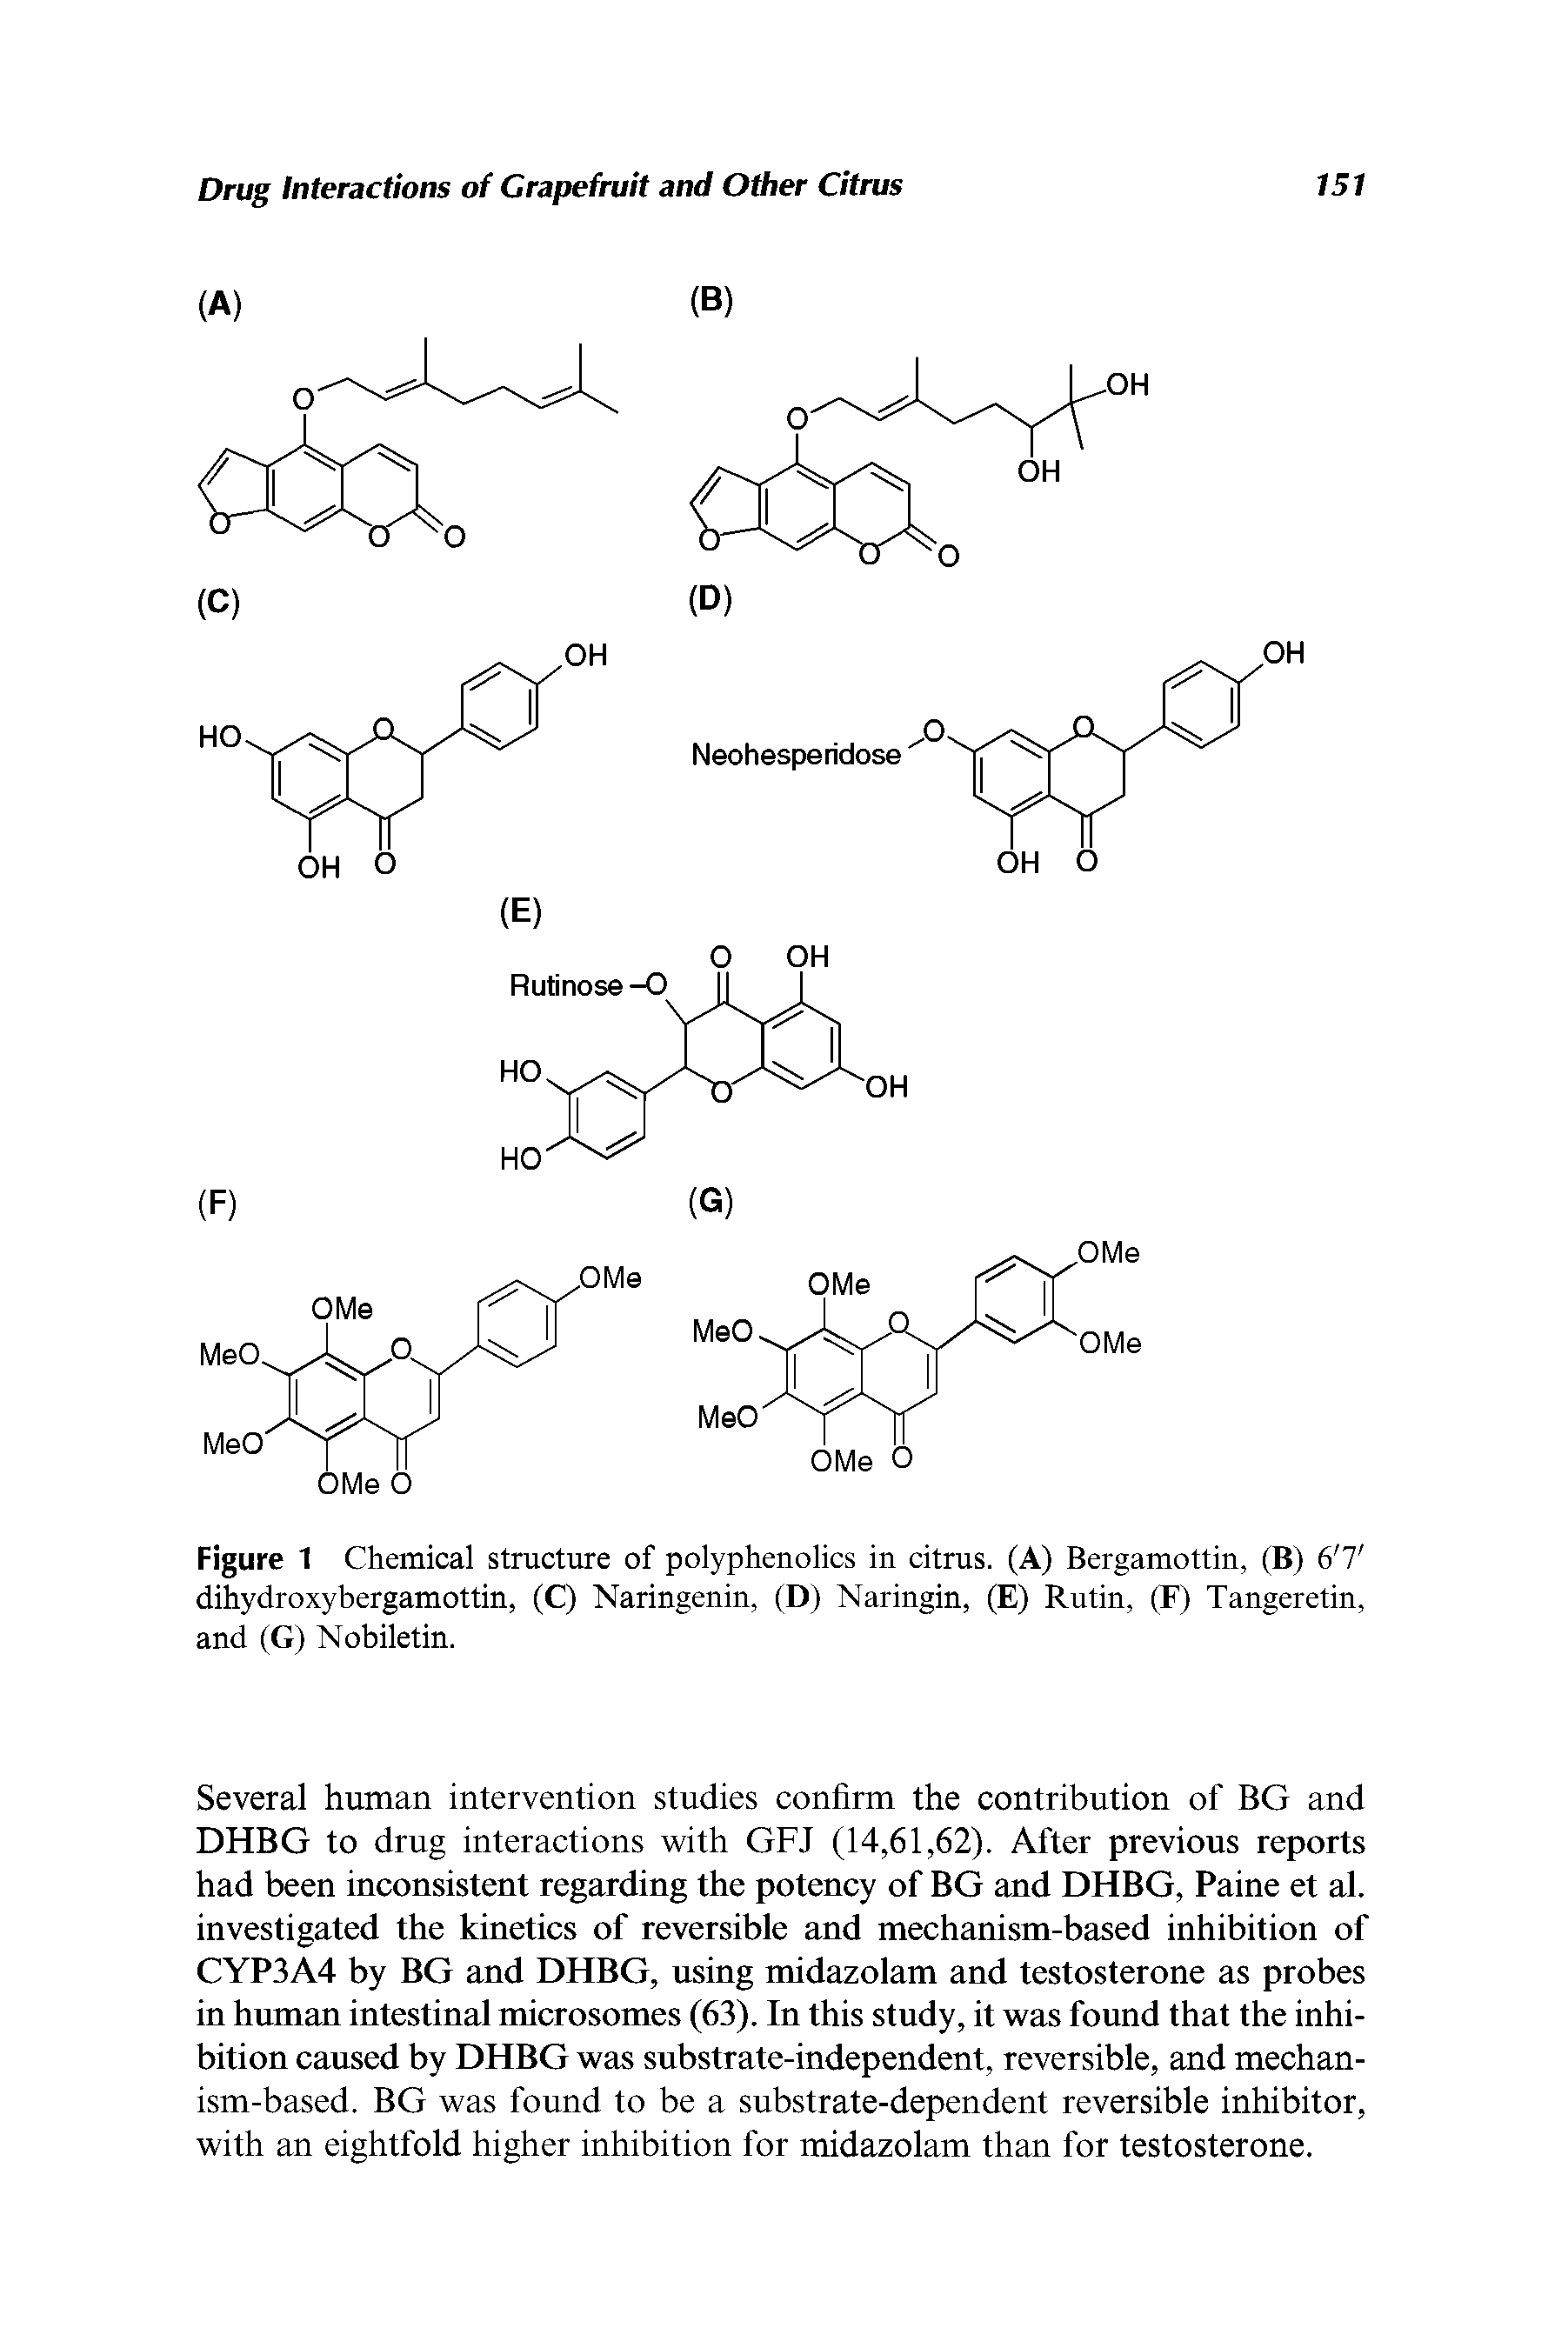 Figure 1 Chemical structure of polyphenolics in citrus. (A) Bergamottin, (B) 6 7 dihydroxybergamottin, (C) Naringenin, (D) Naringin, (E) Rutin, (F) Tangeretin, and (G) Nobiletin.